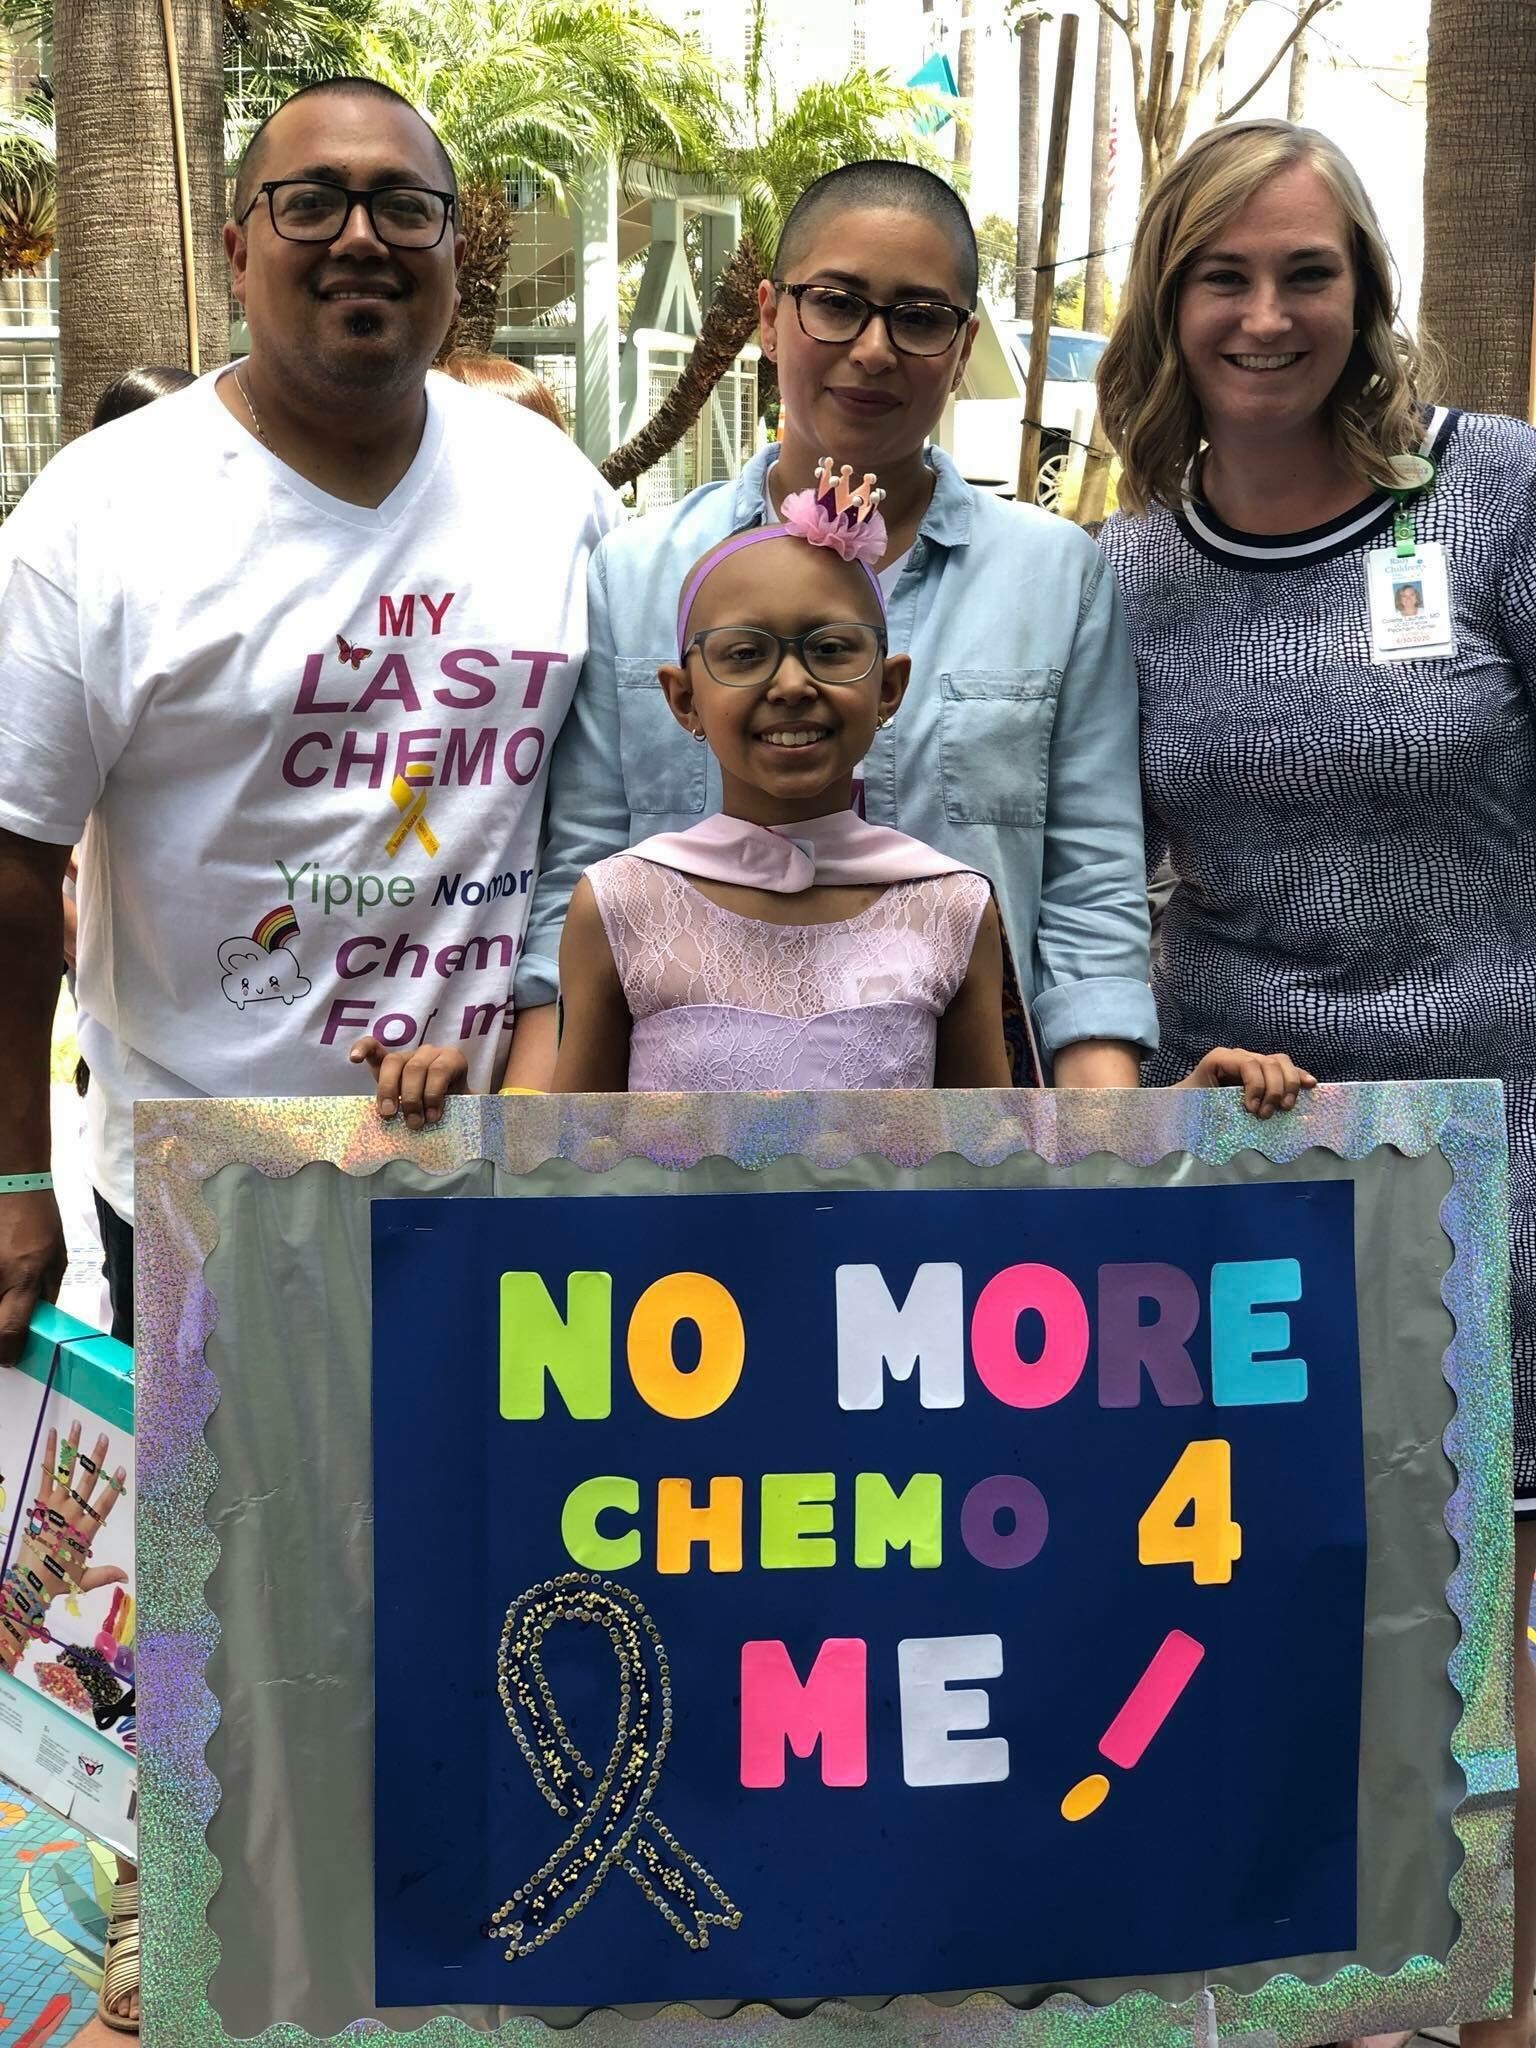 Sarah proudly displays "NO MORE CHEMO 4 ME!" sign